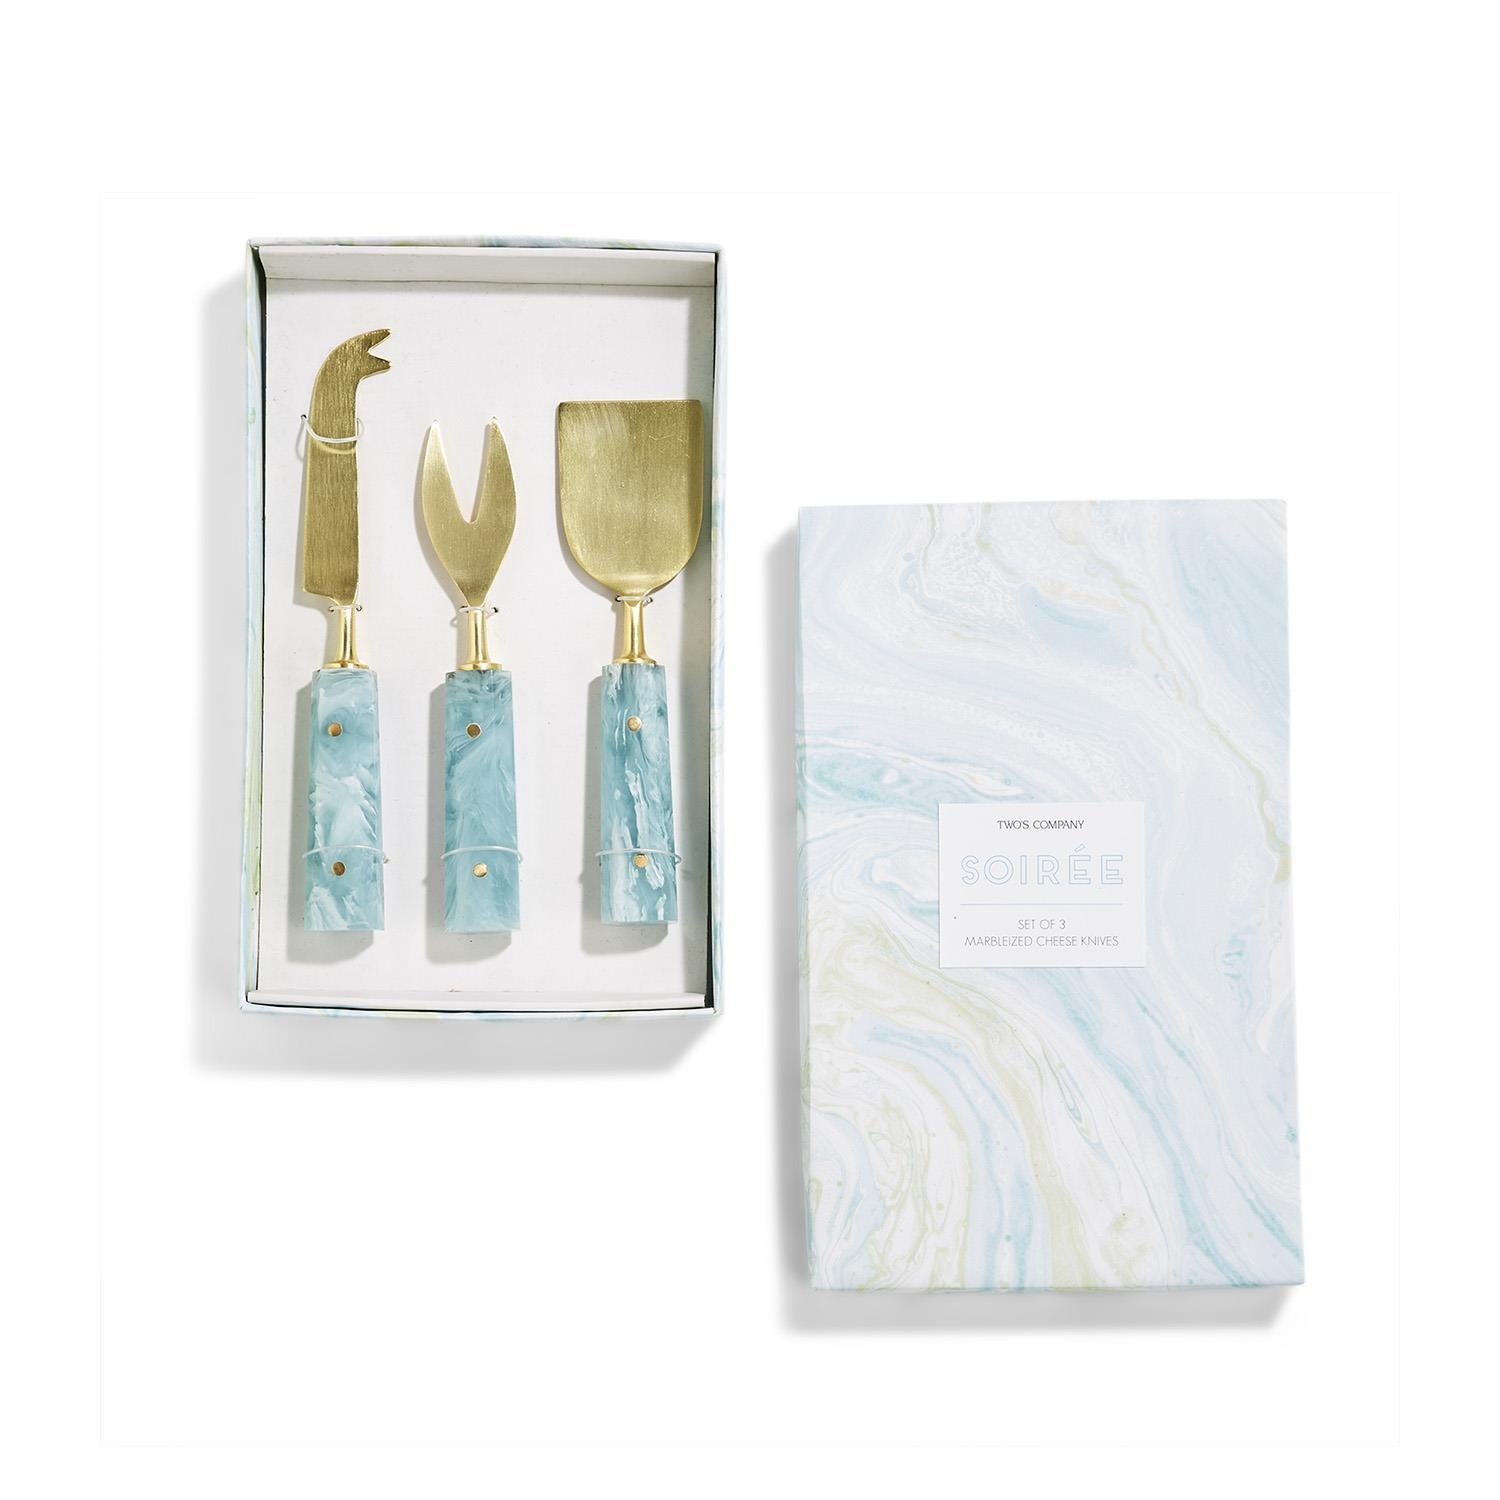 Aqua Swirl Cheese Knives in Gift Box - Set of 3